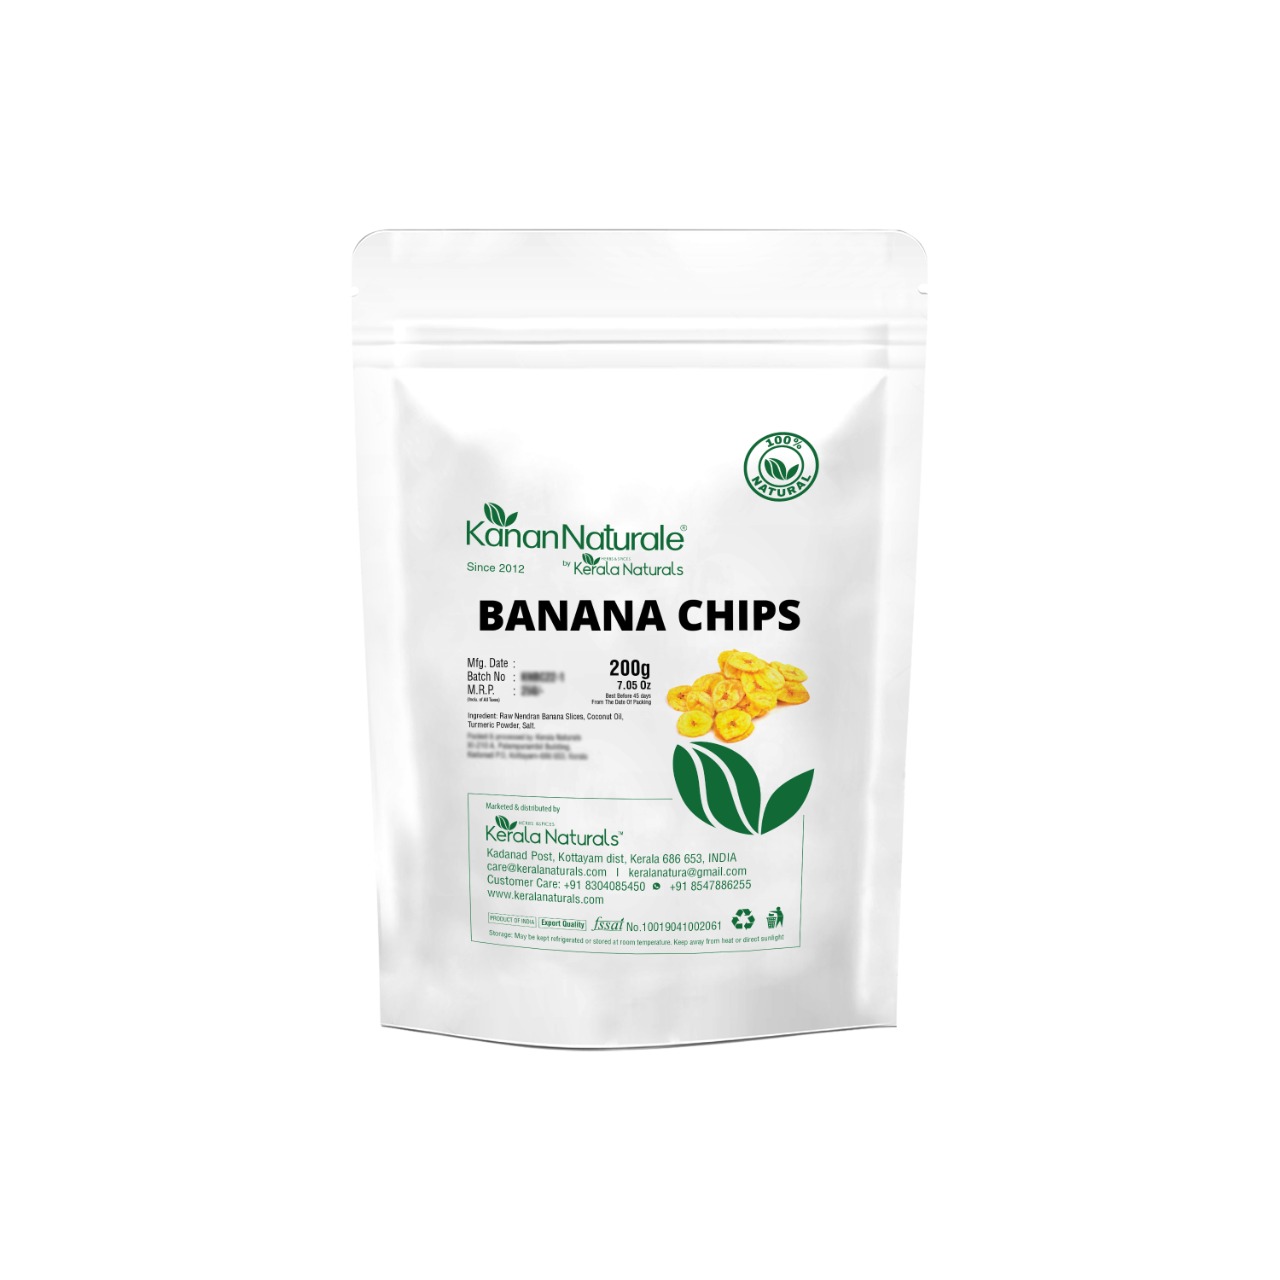 Buy Kanan Naturale Banana Chips at Best Price Online